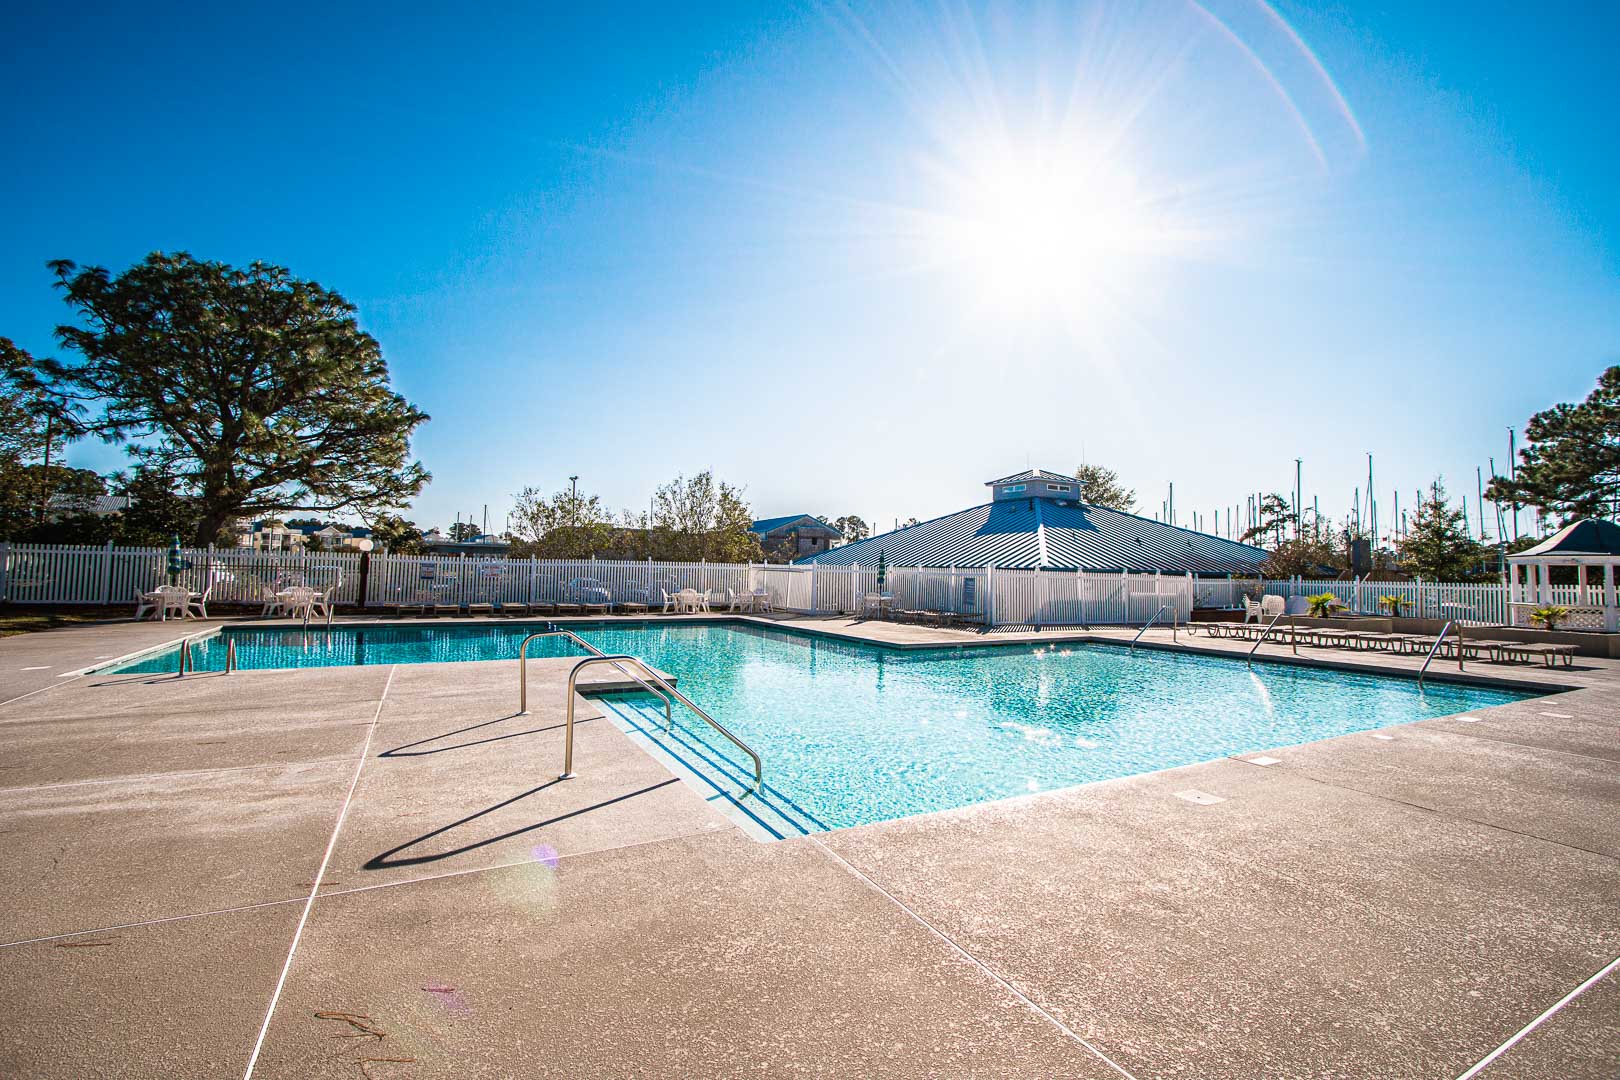 A spacious outdoor swimming pool at VRI's Harbourside II in New Bern, North Carolina.